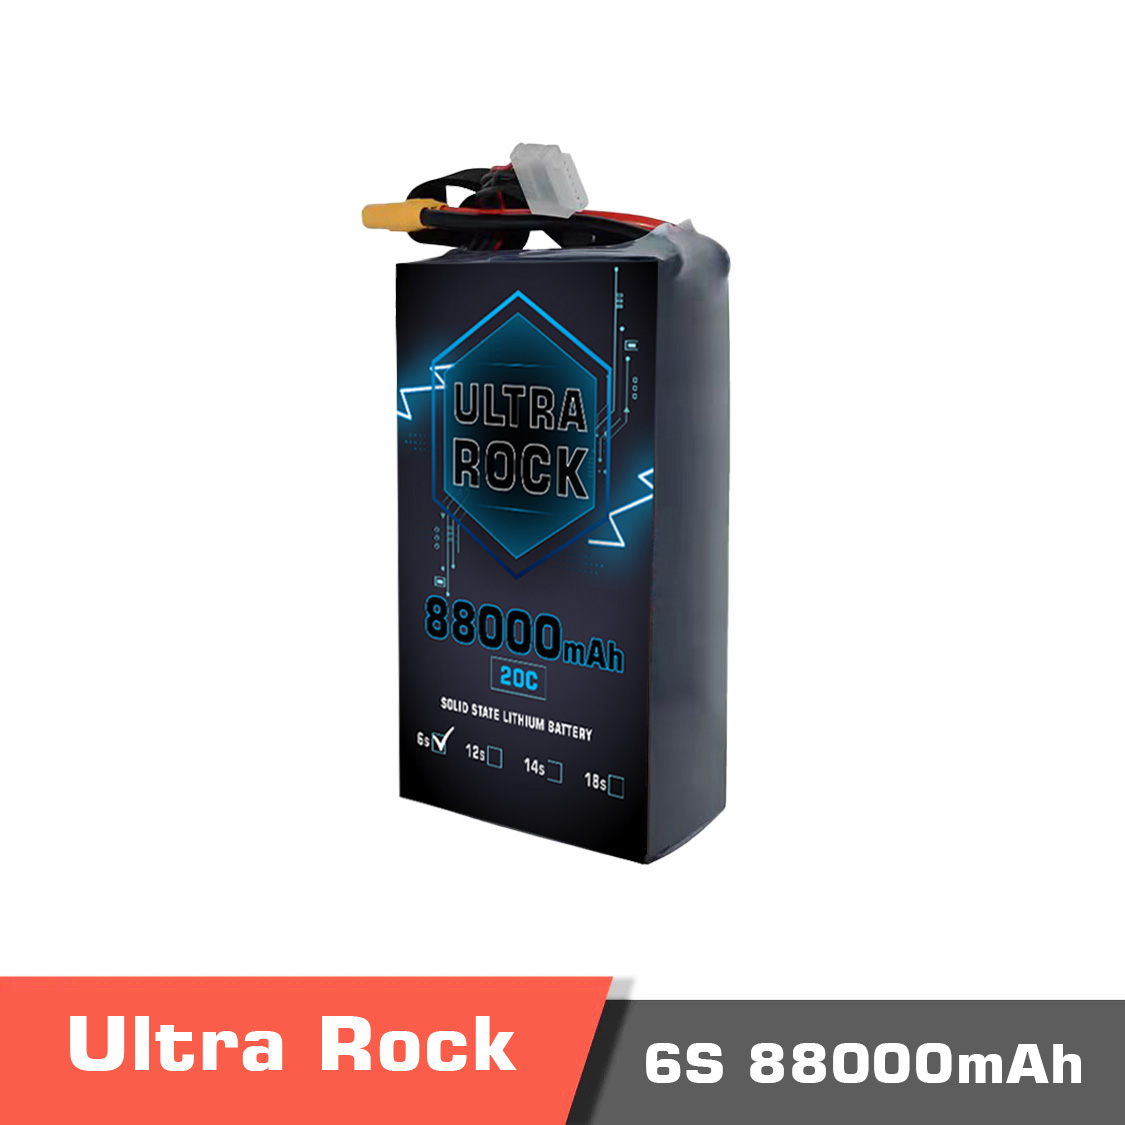 88000 6s temp - Ultra Rock Ultra HV Semi Solid-State Battery,Ultra HV Semi Solid-State Battery,12S 88000mAh high voltage LiPo Battery,12S 88000mAh HV LiPo Battery,Solid-state LiPo battery,lipo battery,drone battery,12s battery,high energy density battery,UAV,drone,vtol - MotioNew - 1